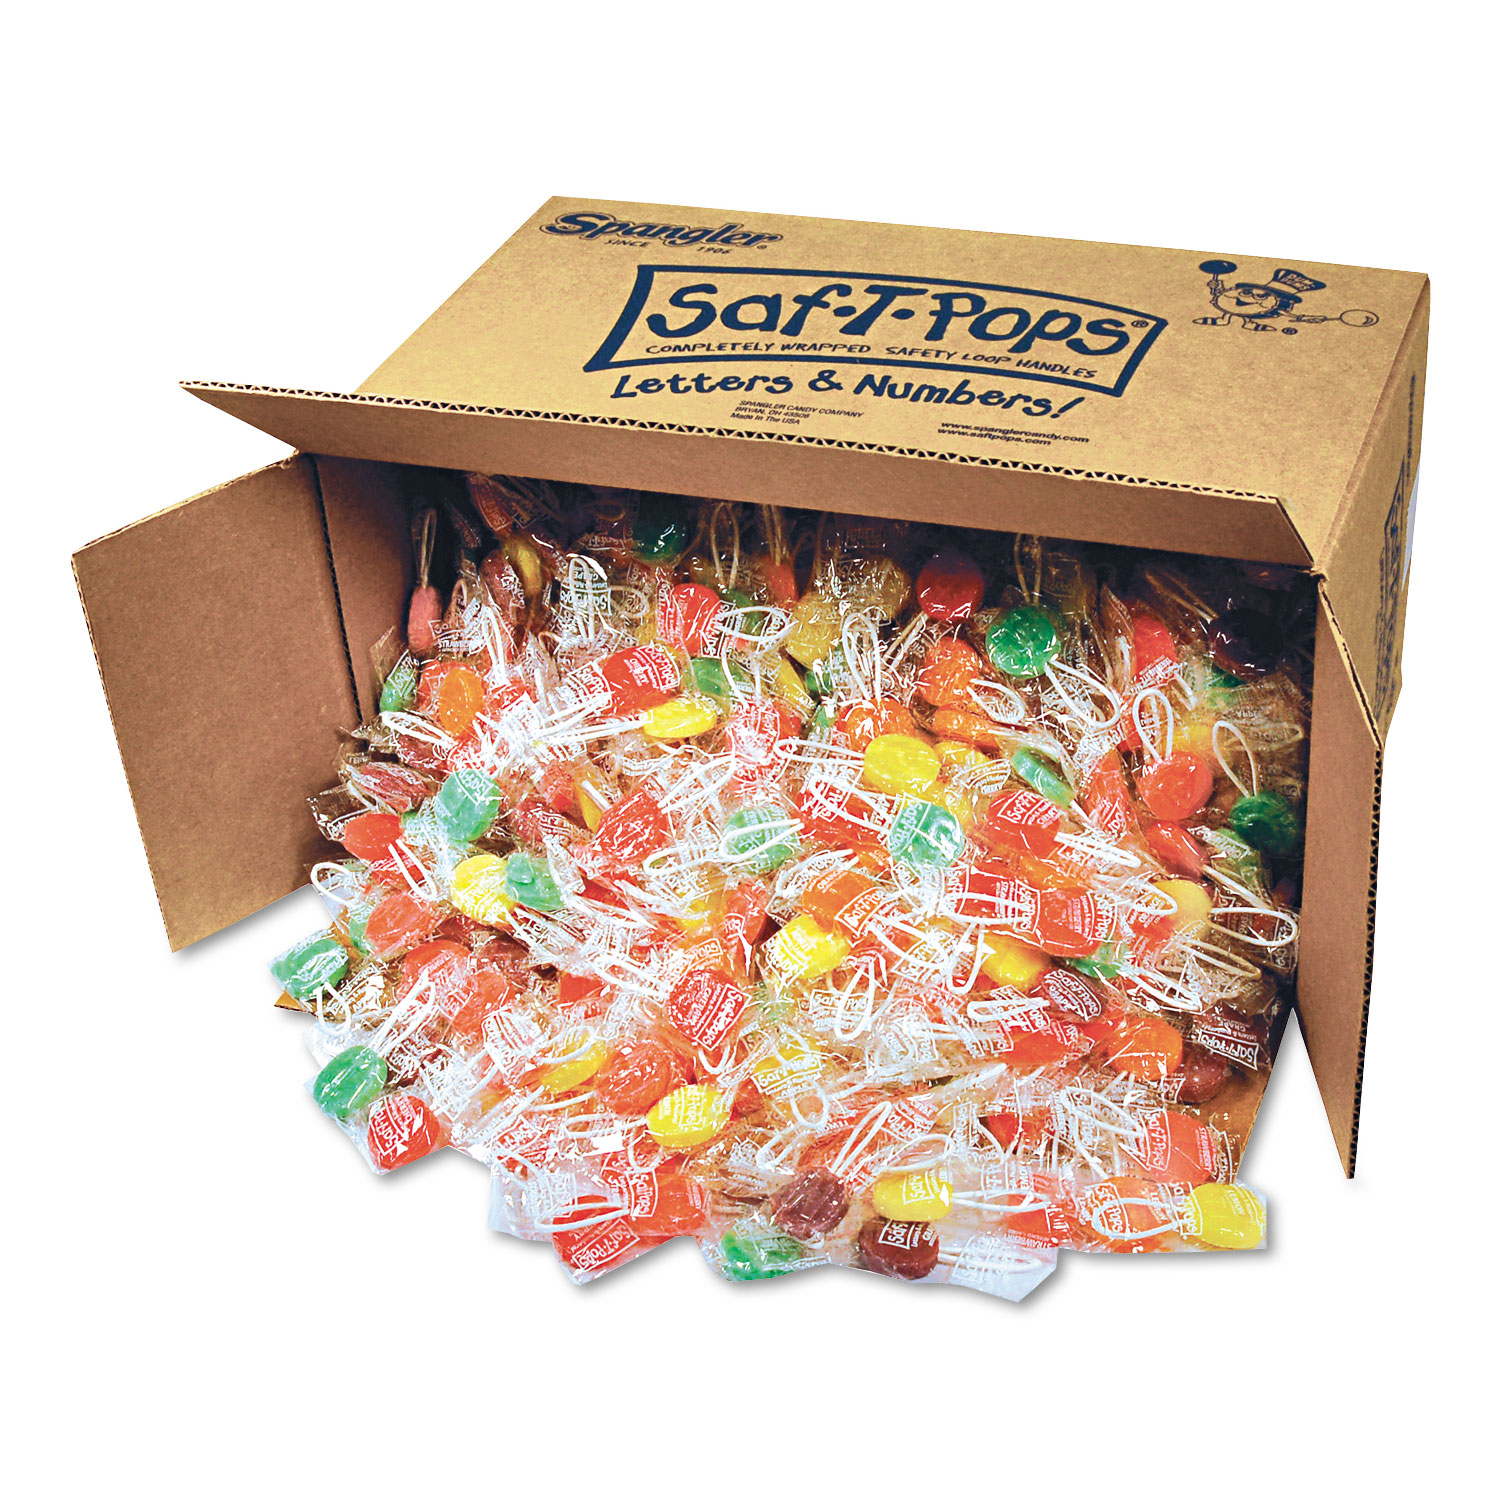  Saf-T-Pops 545 Saf-T-Pops, Assorted Flavors, Individually Wrapped, Bulk 25 lb Box, 1000/Carton (SPA545) 